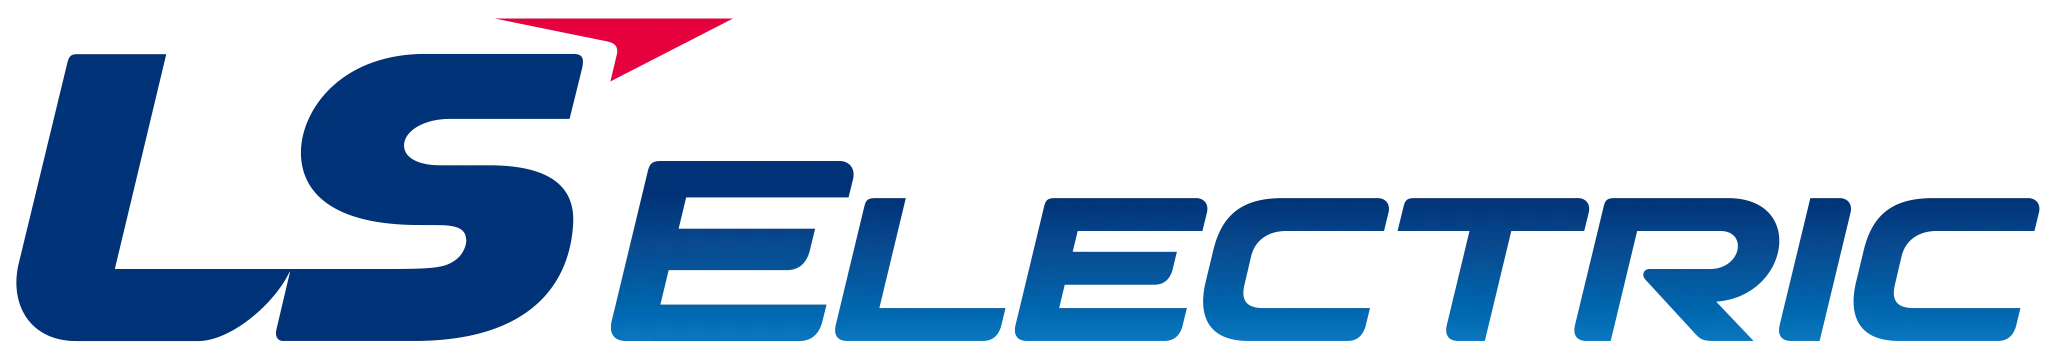 LS Electric logo